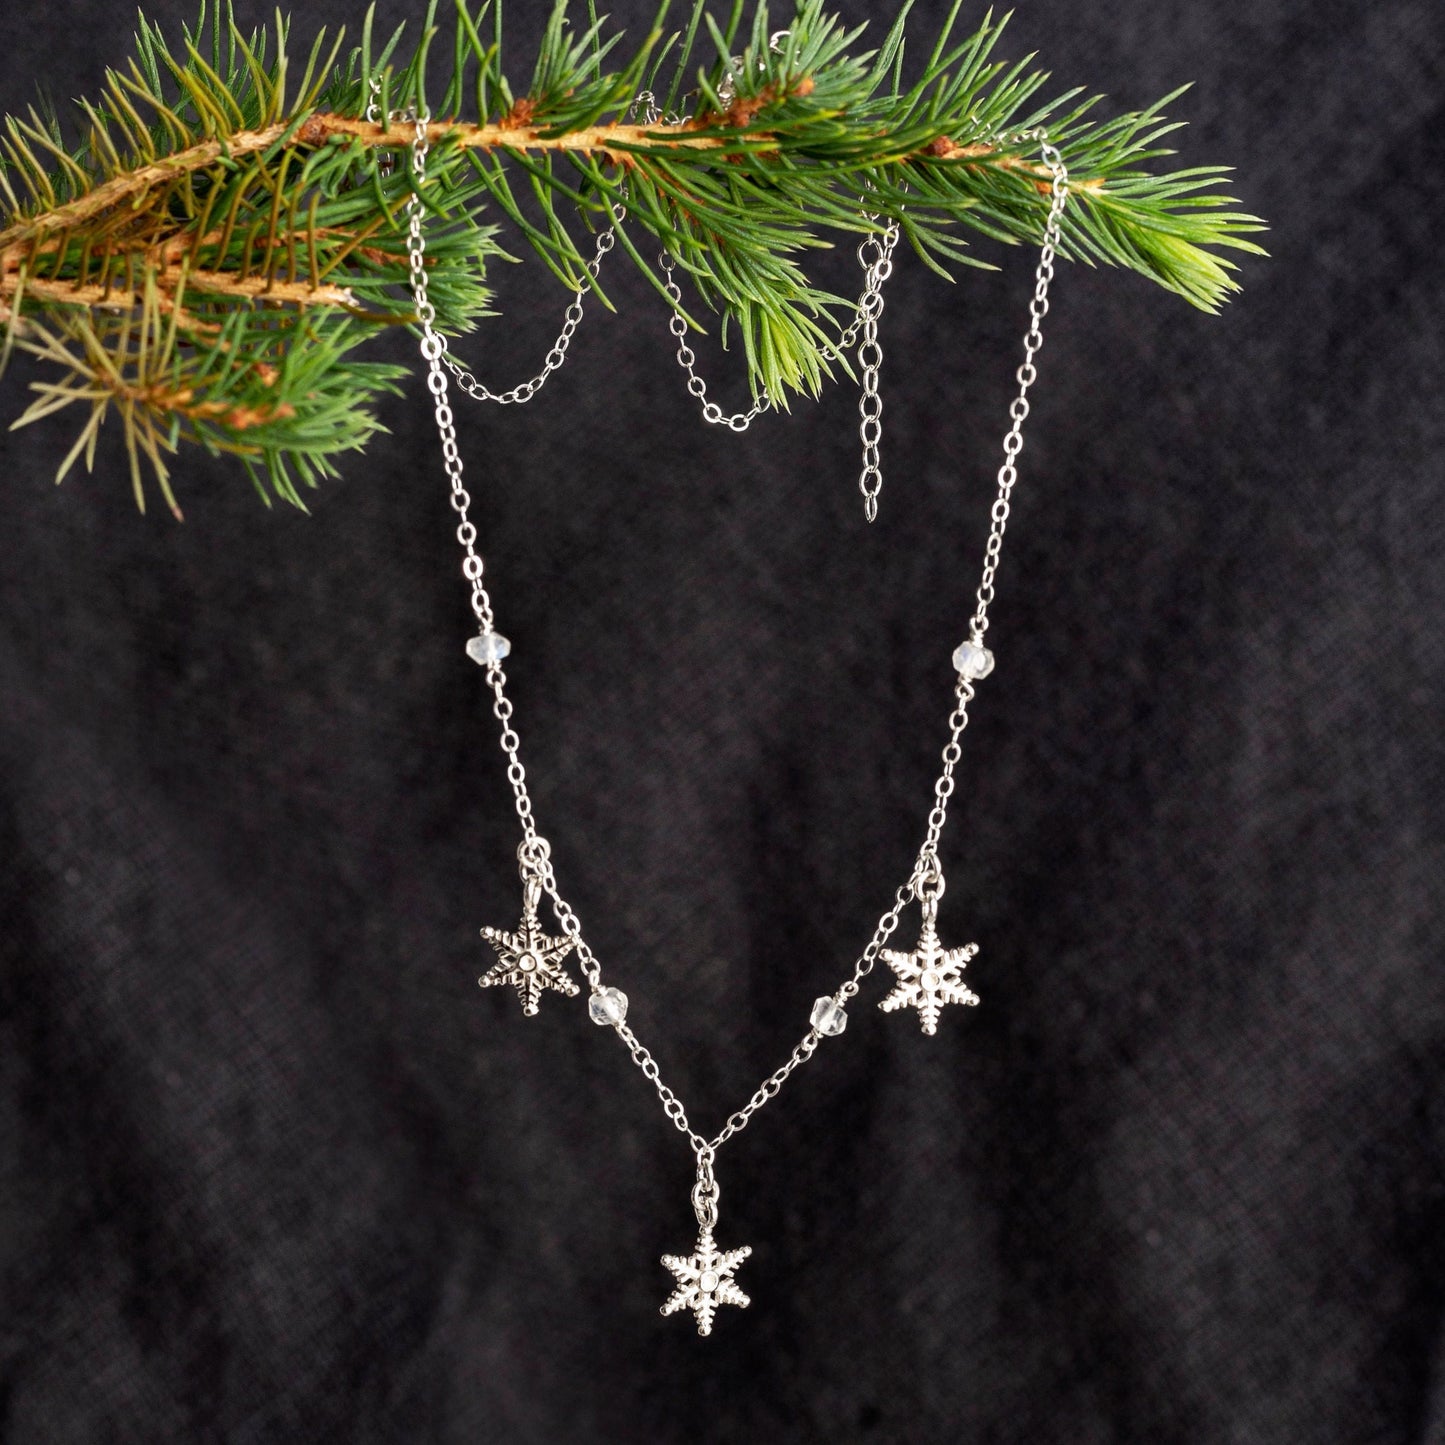 Snowflake Jewelry for Women